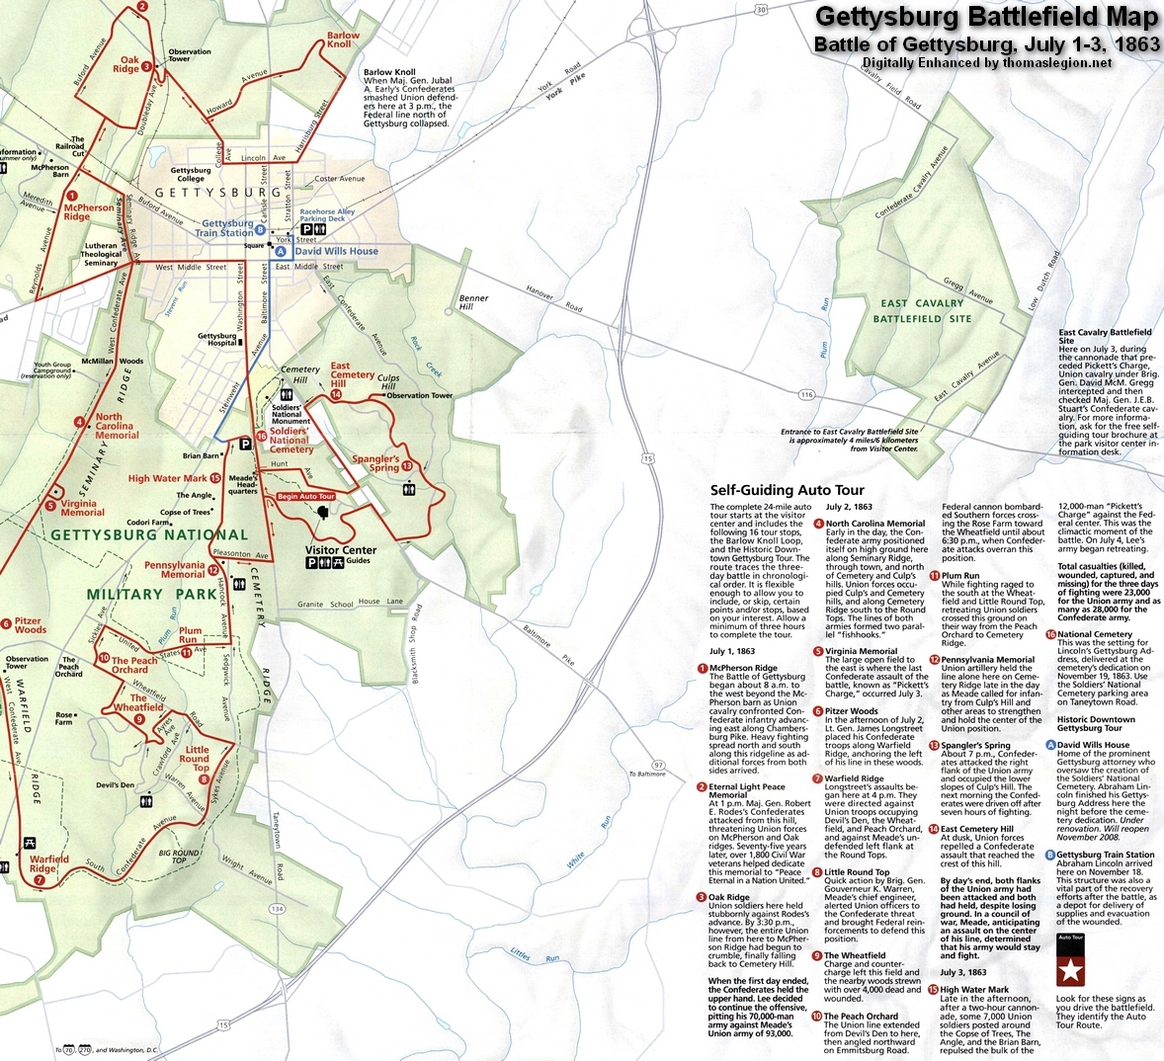 Pitzer Woods and Gettysburg Battlefield Map.jpg